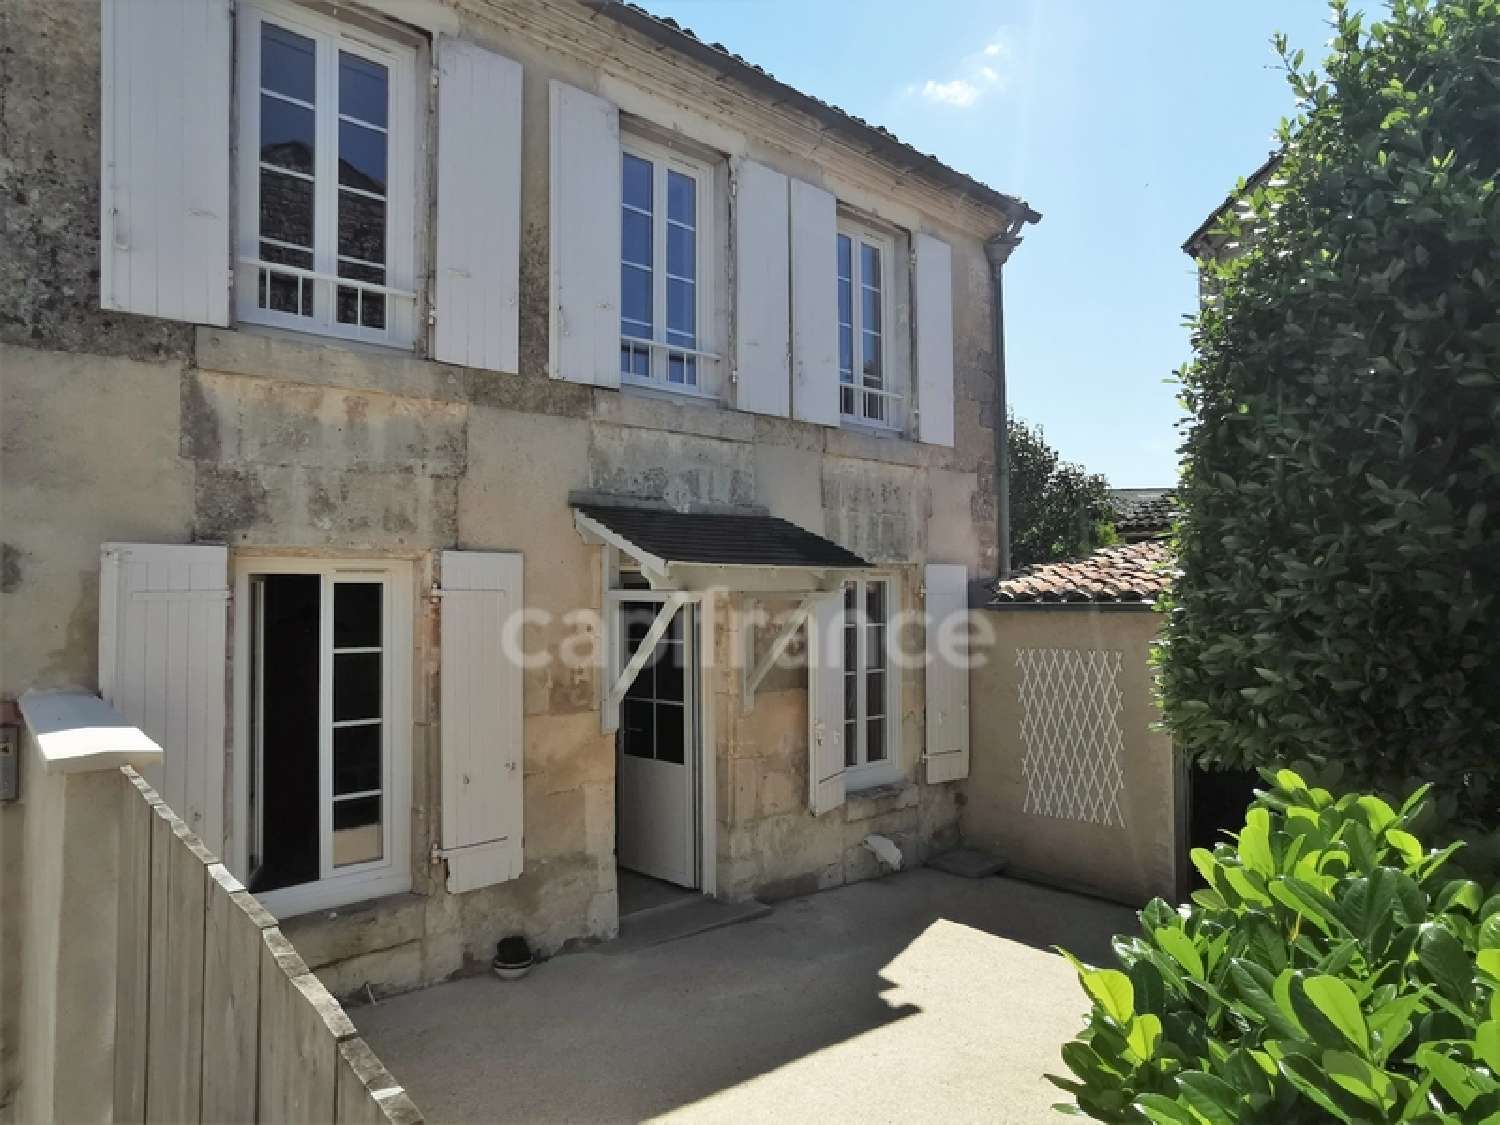  for sale city house Jarnac Charente 1